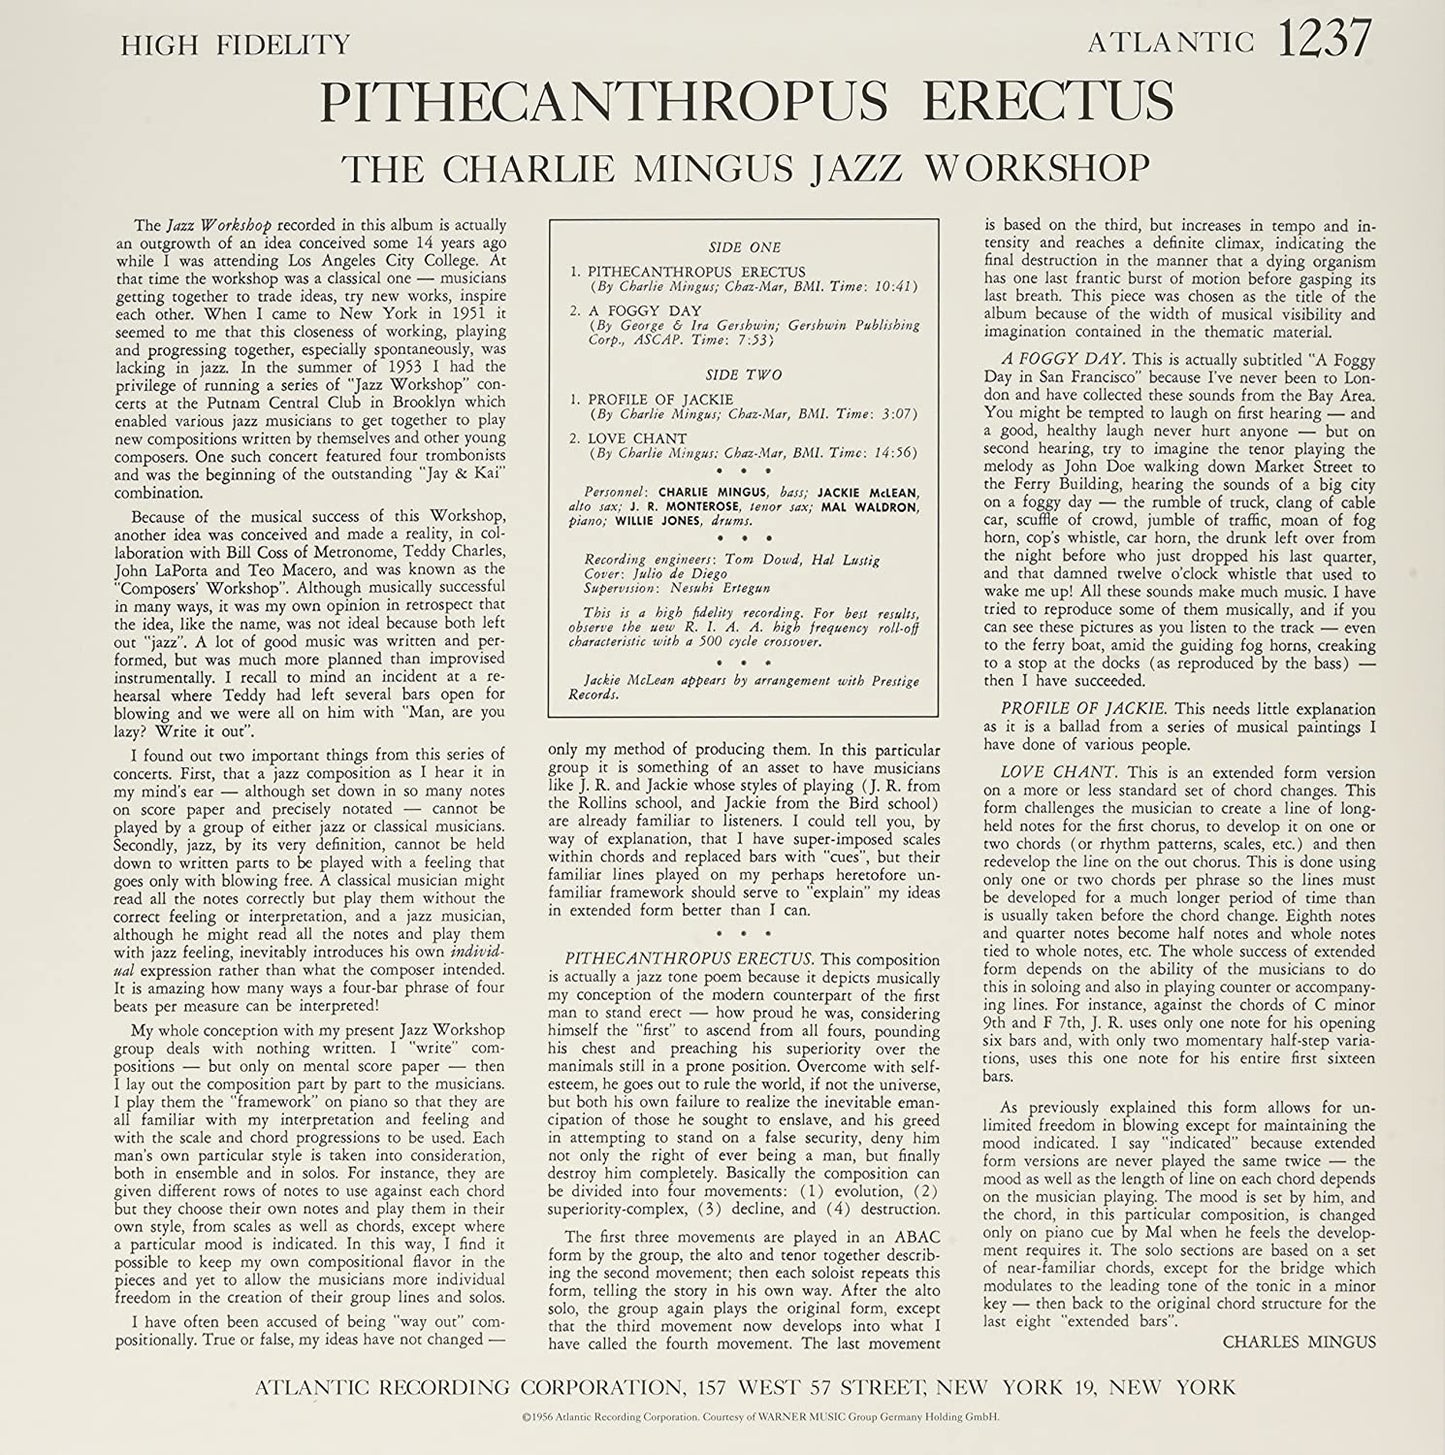 Mingus, Charles/Pithecanthropus Erectus (Audiophile Pressing) [LP]